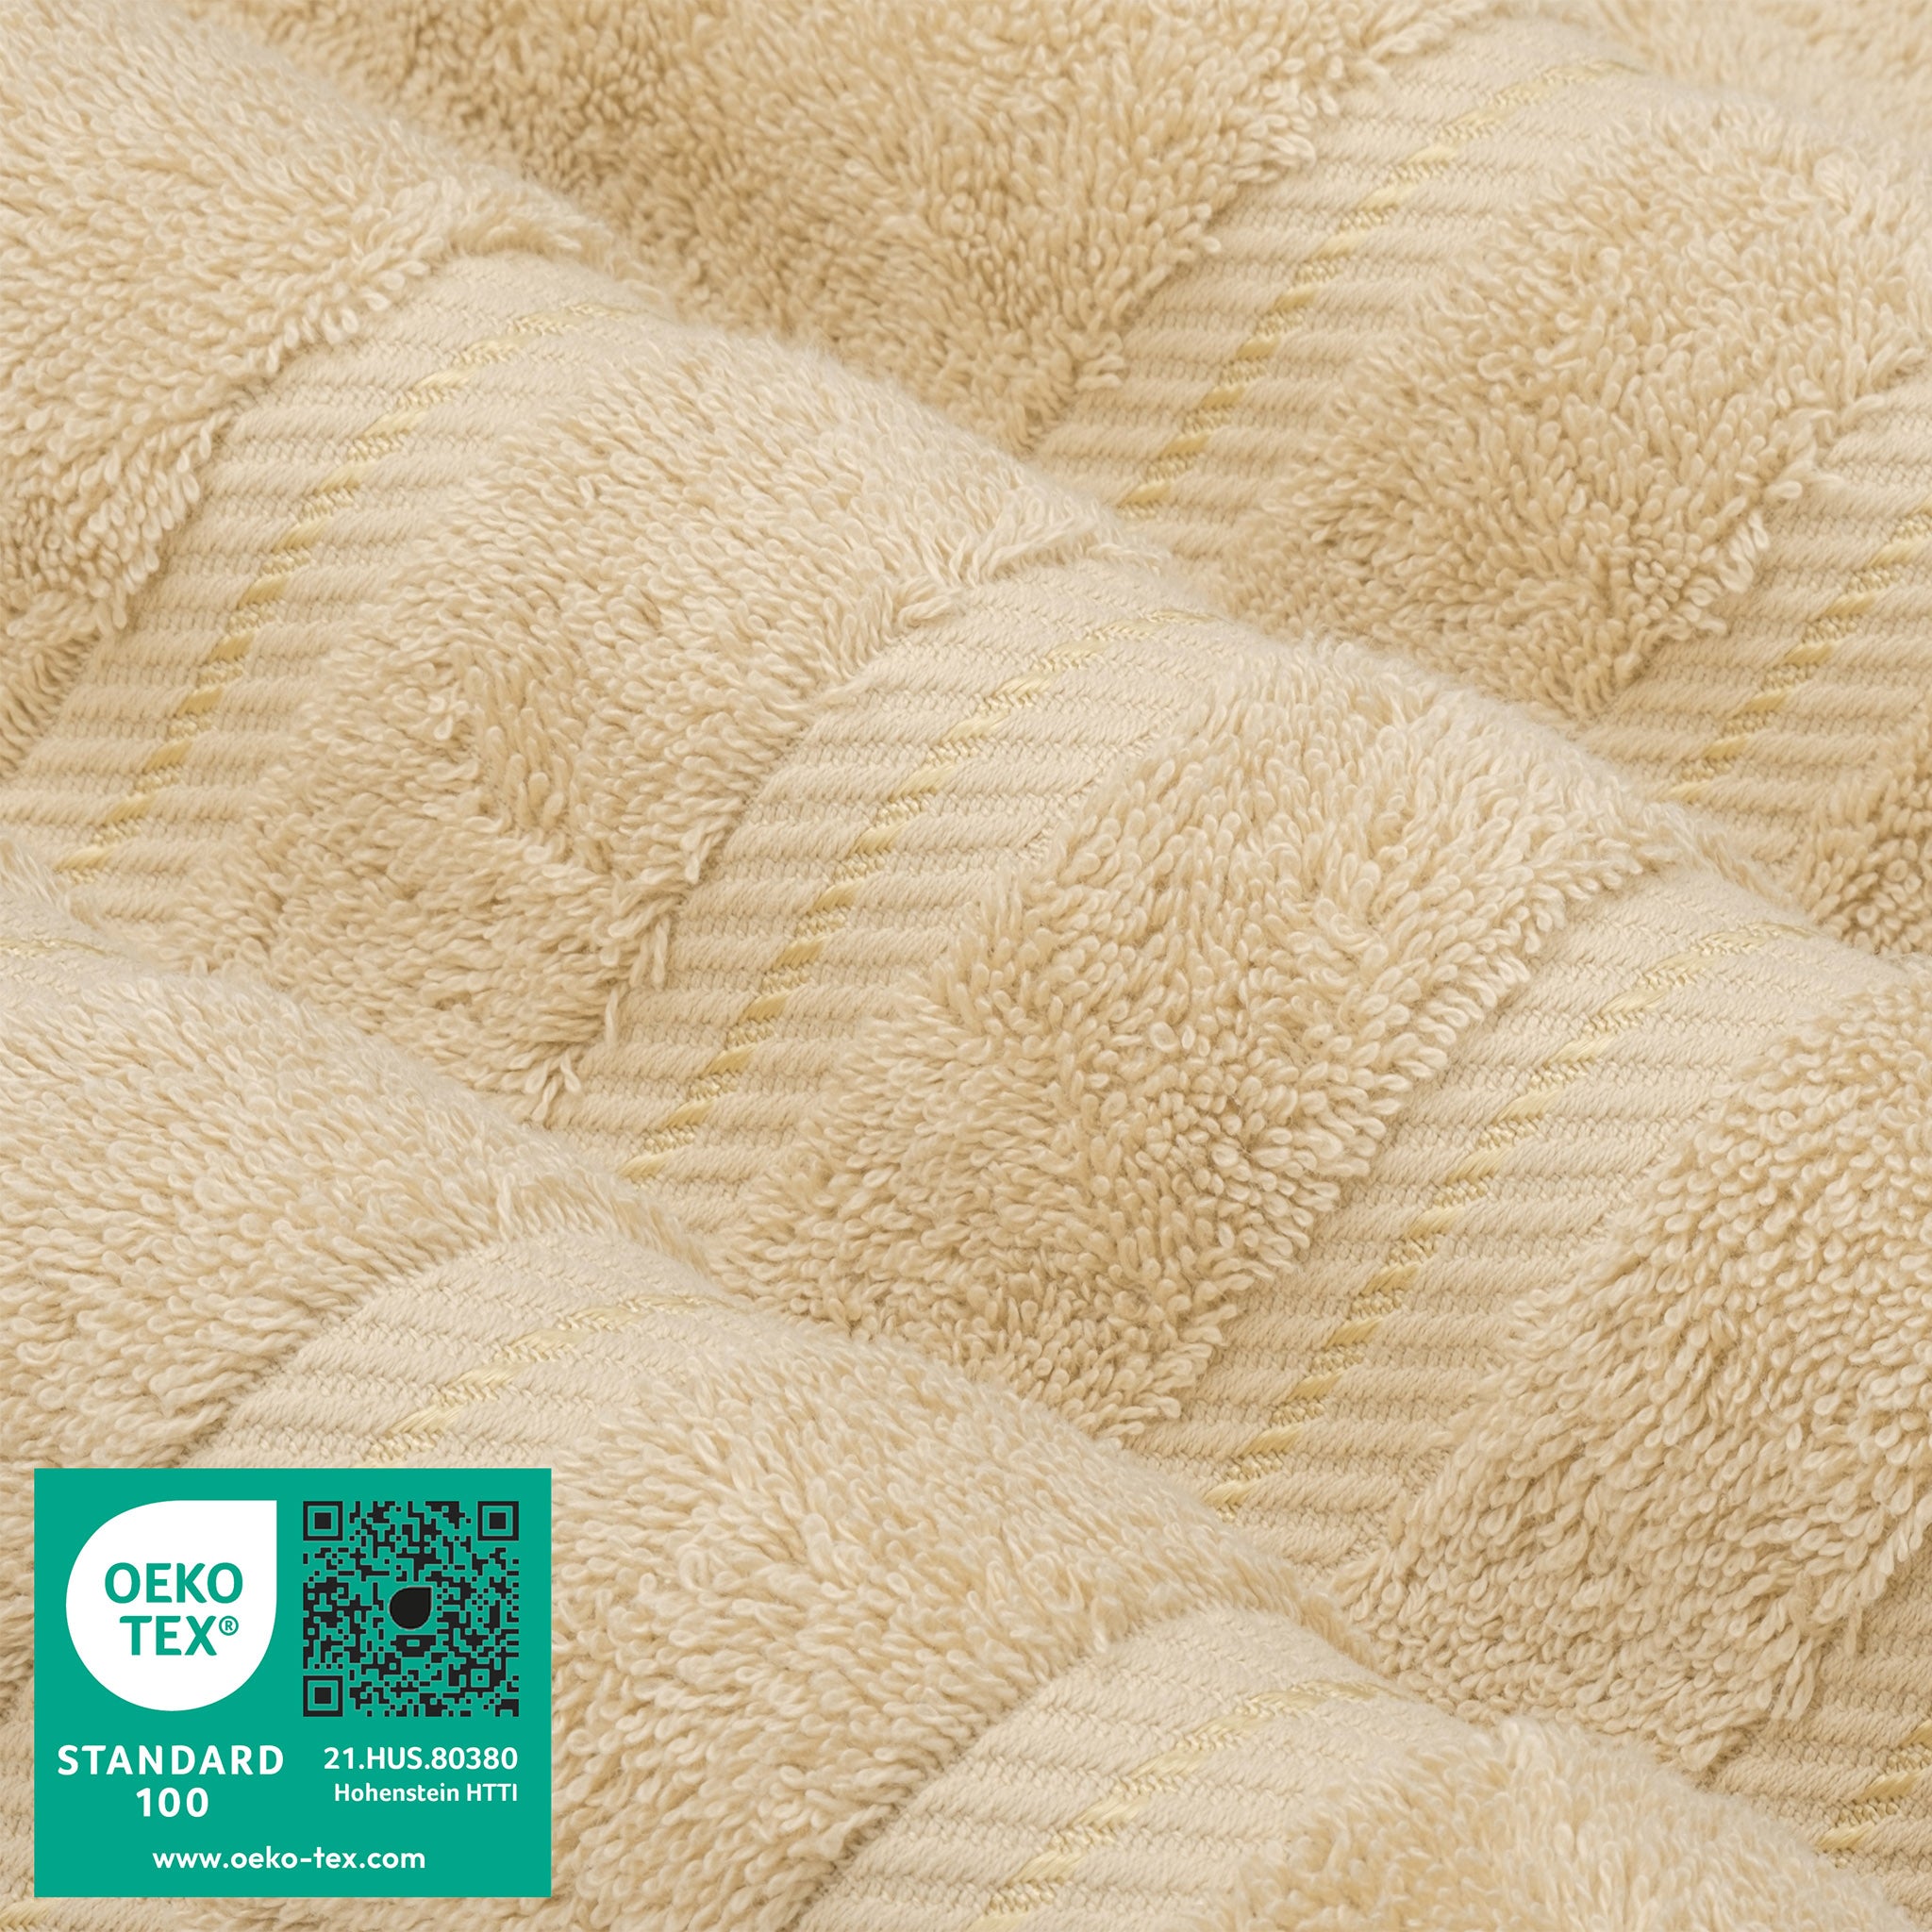 American Soft Linen 35x70 Inch 100% Turkish Cotton Jumbo Bath Sheet sand-taupe-2